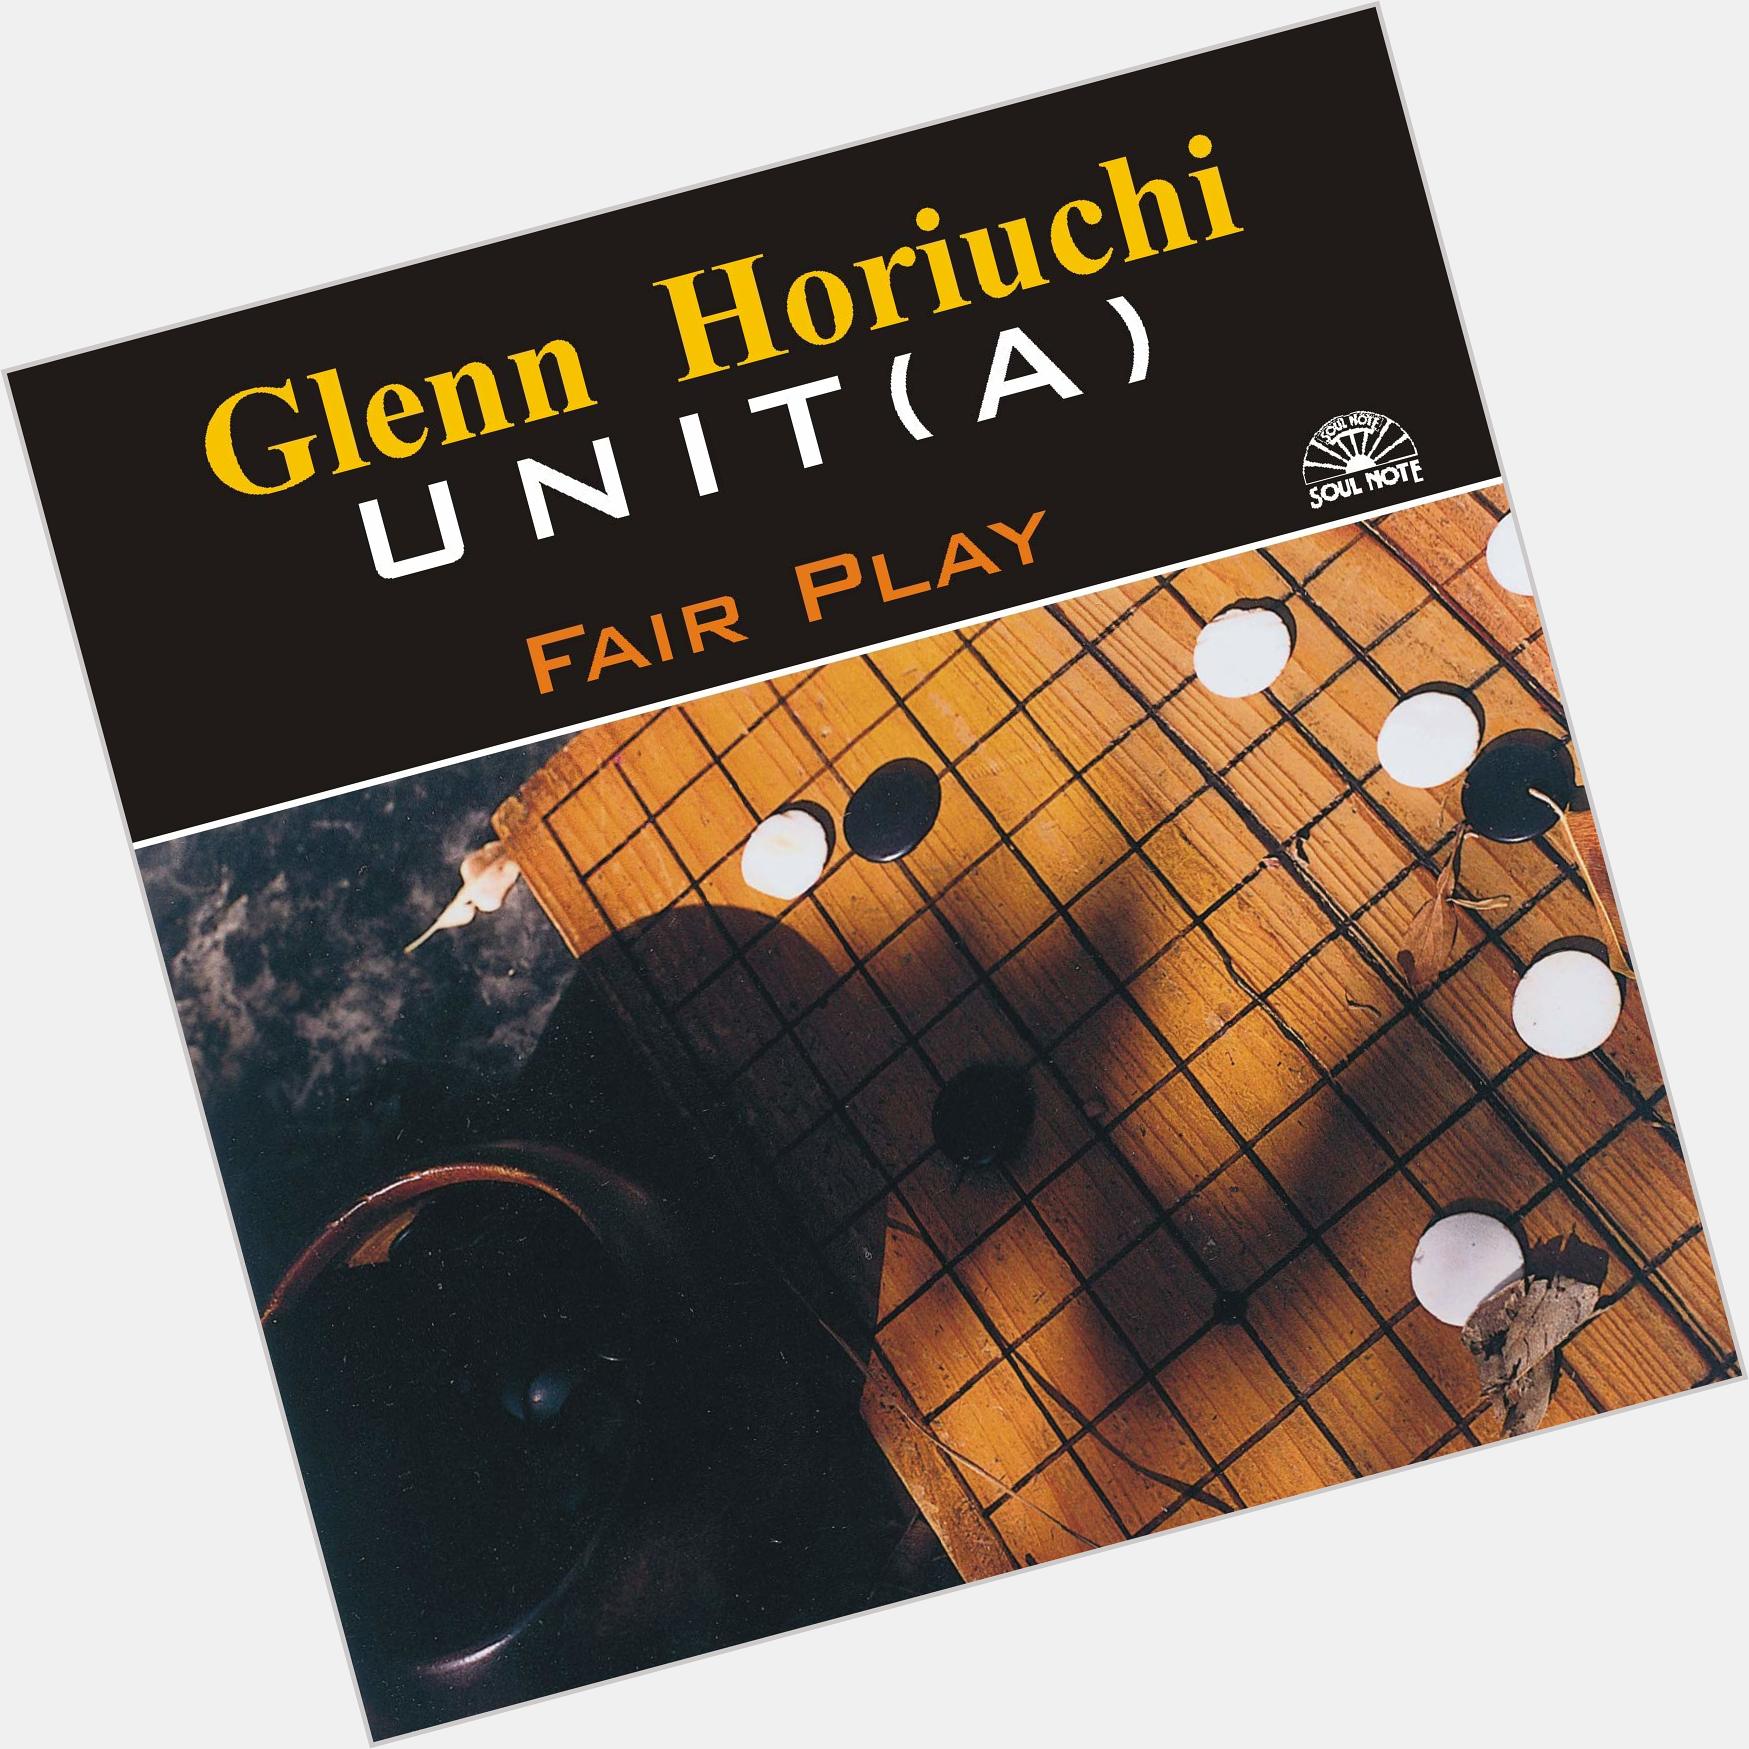 Glenn Horiuchi dating 2